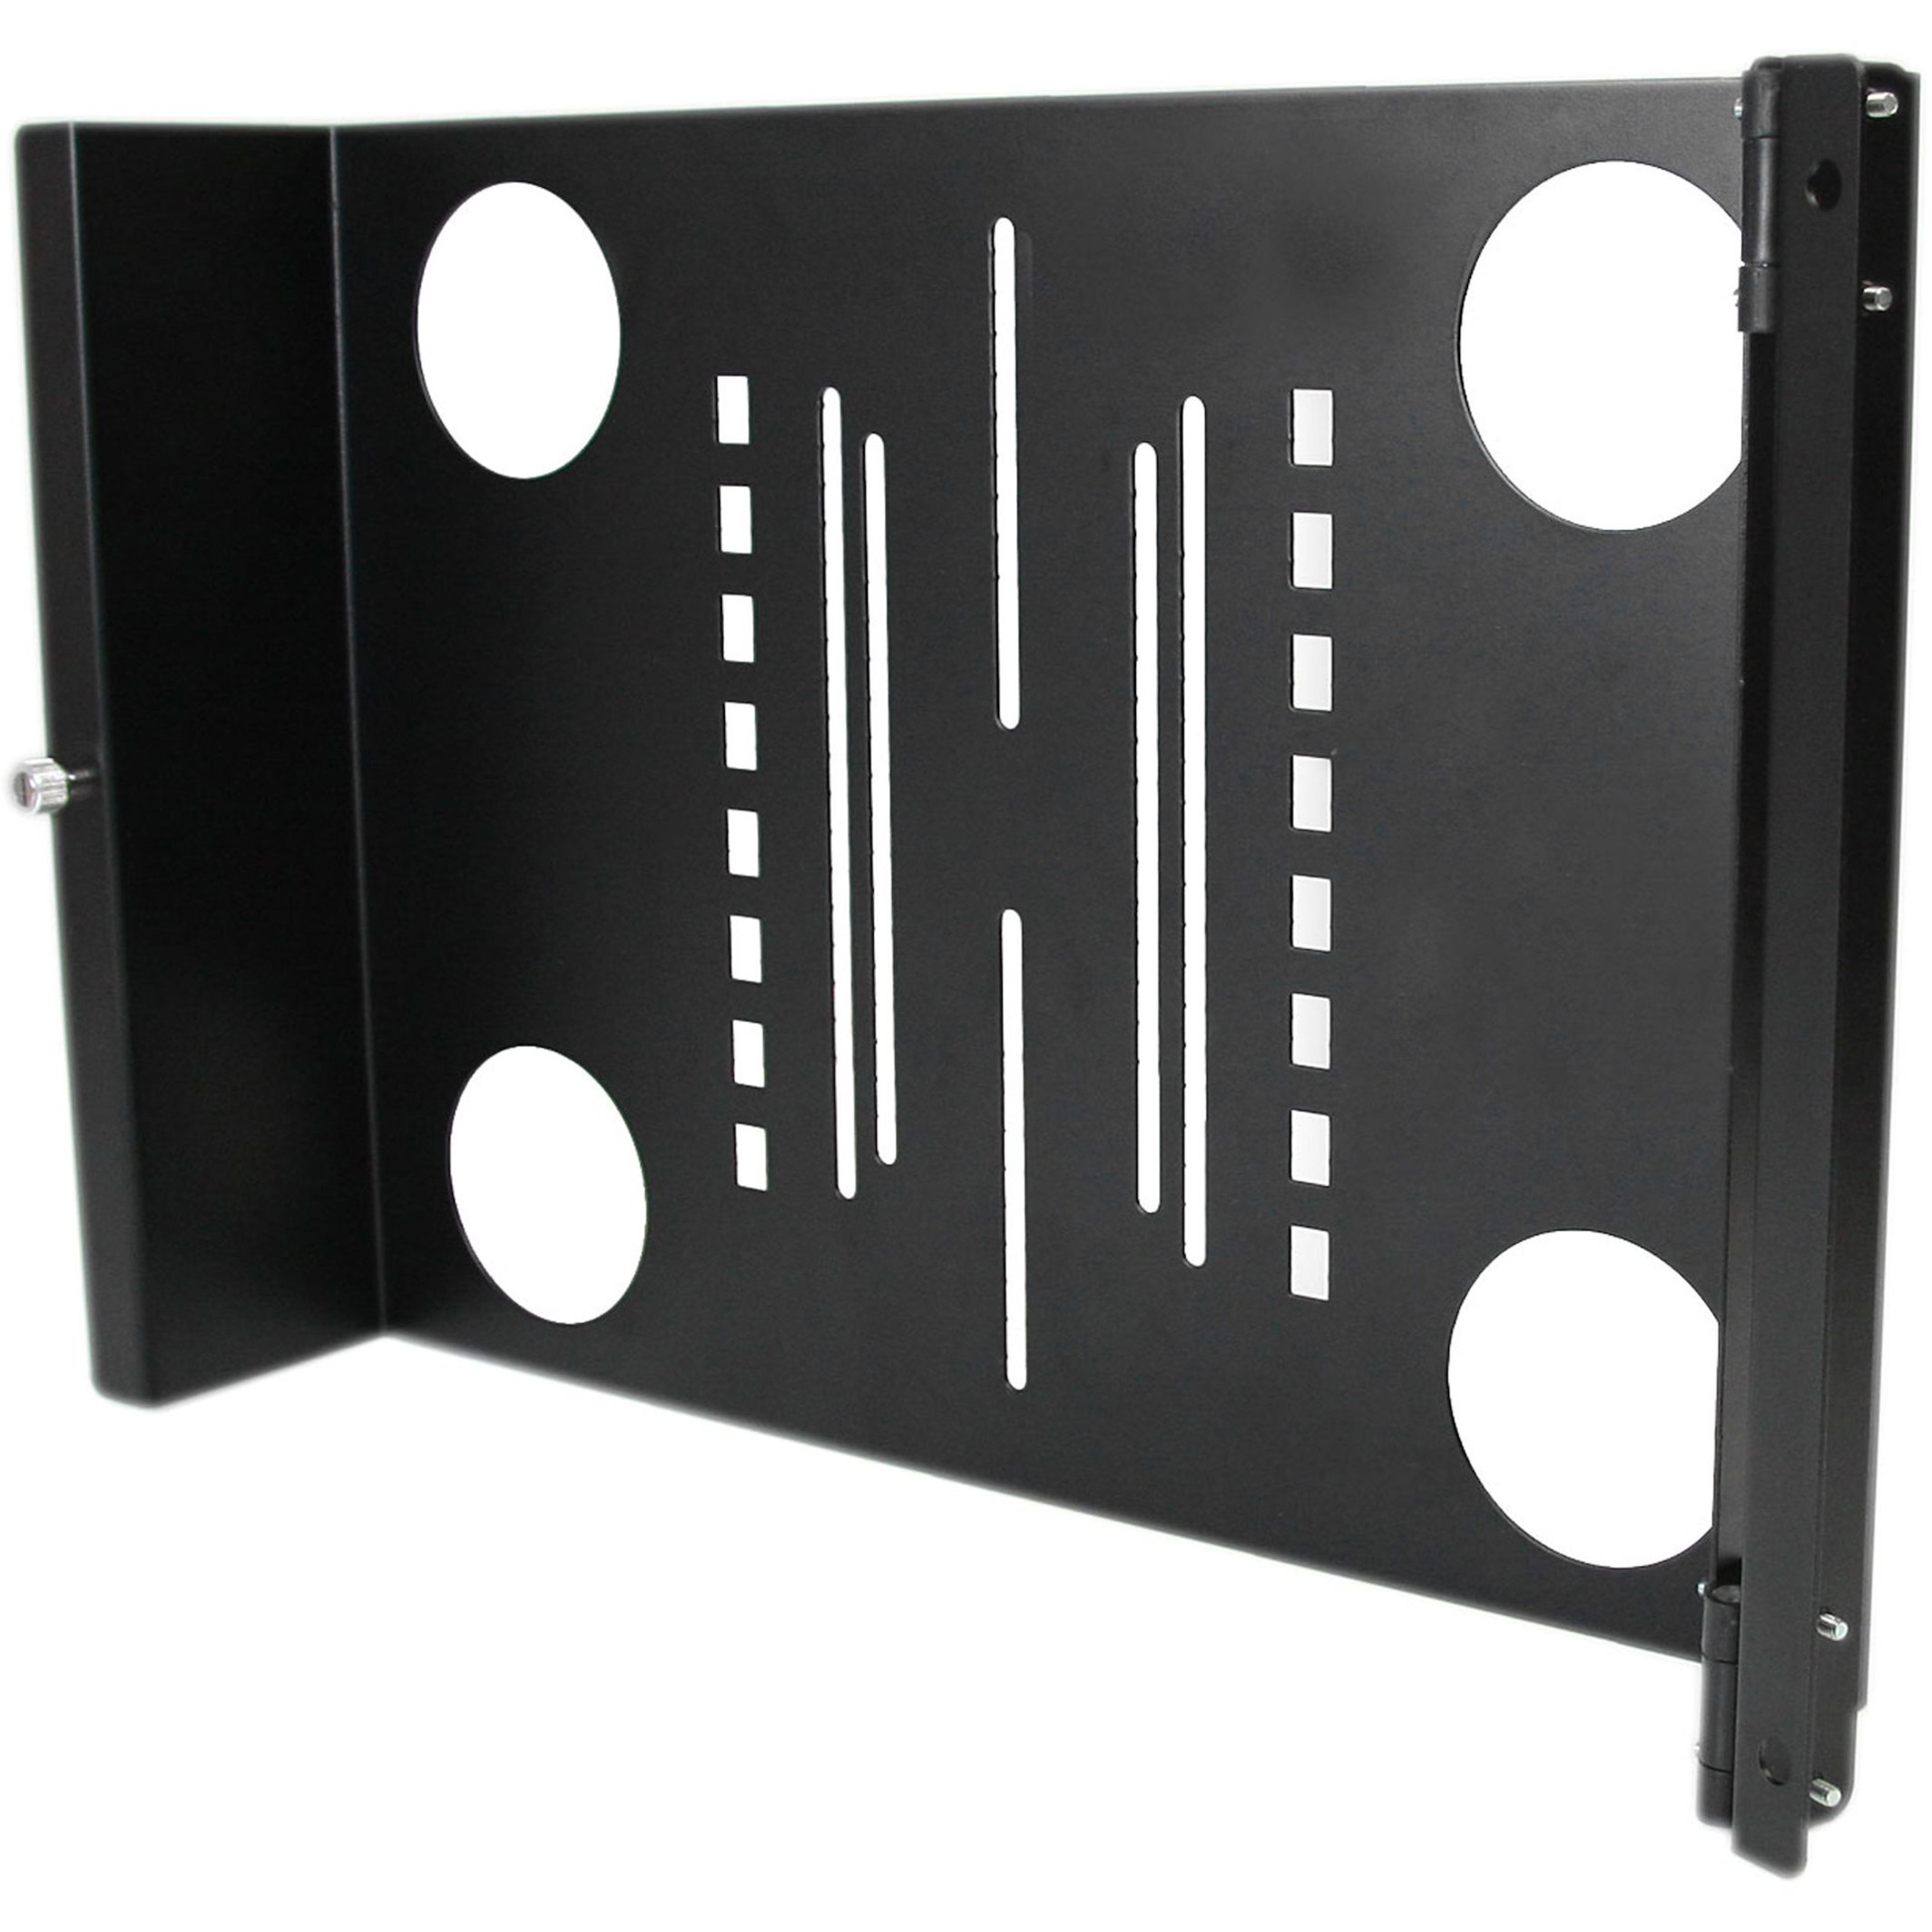 Startech .com Universal Swivel VESA LCD Mounting Bracket for 19in Rack or CabinetFor Flat Panel Display17 to 19 Screen SupportSteelB… RKLCDBKT